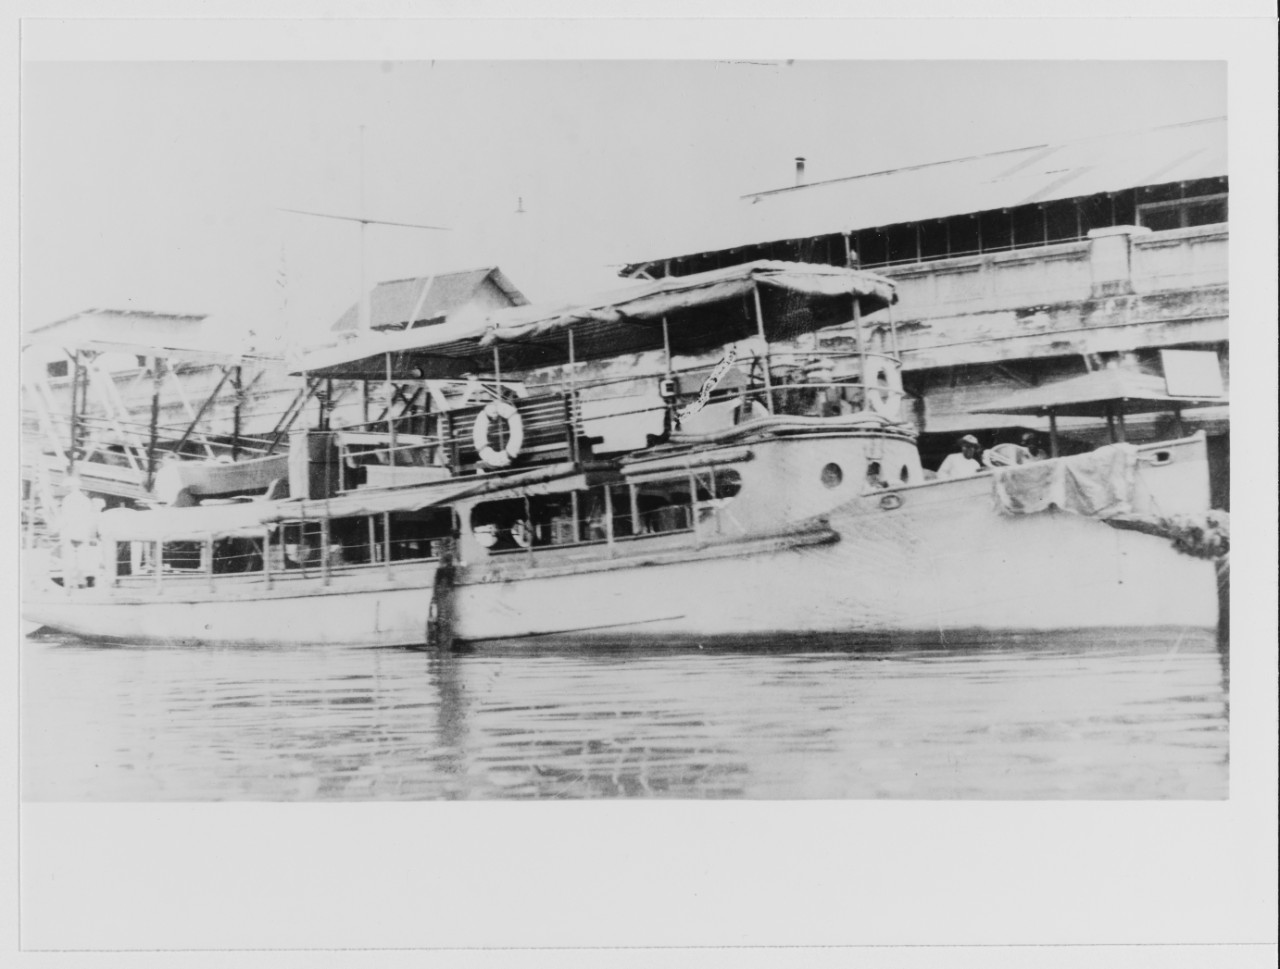 PEQUENI (Panama Canal Co. vessel, 1917)